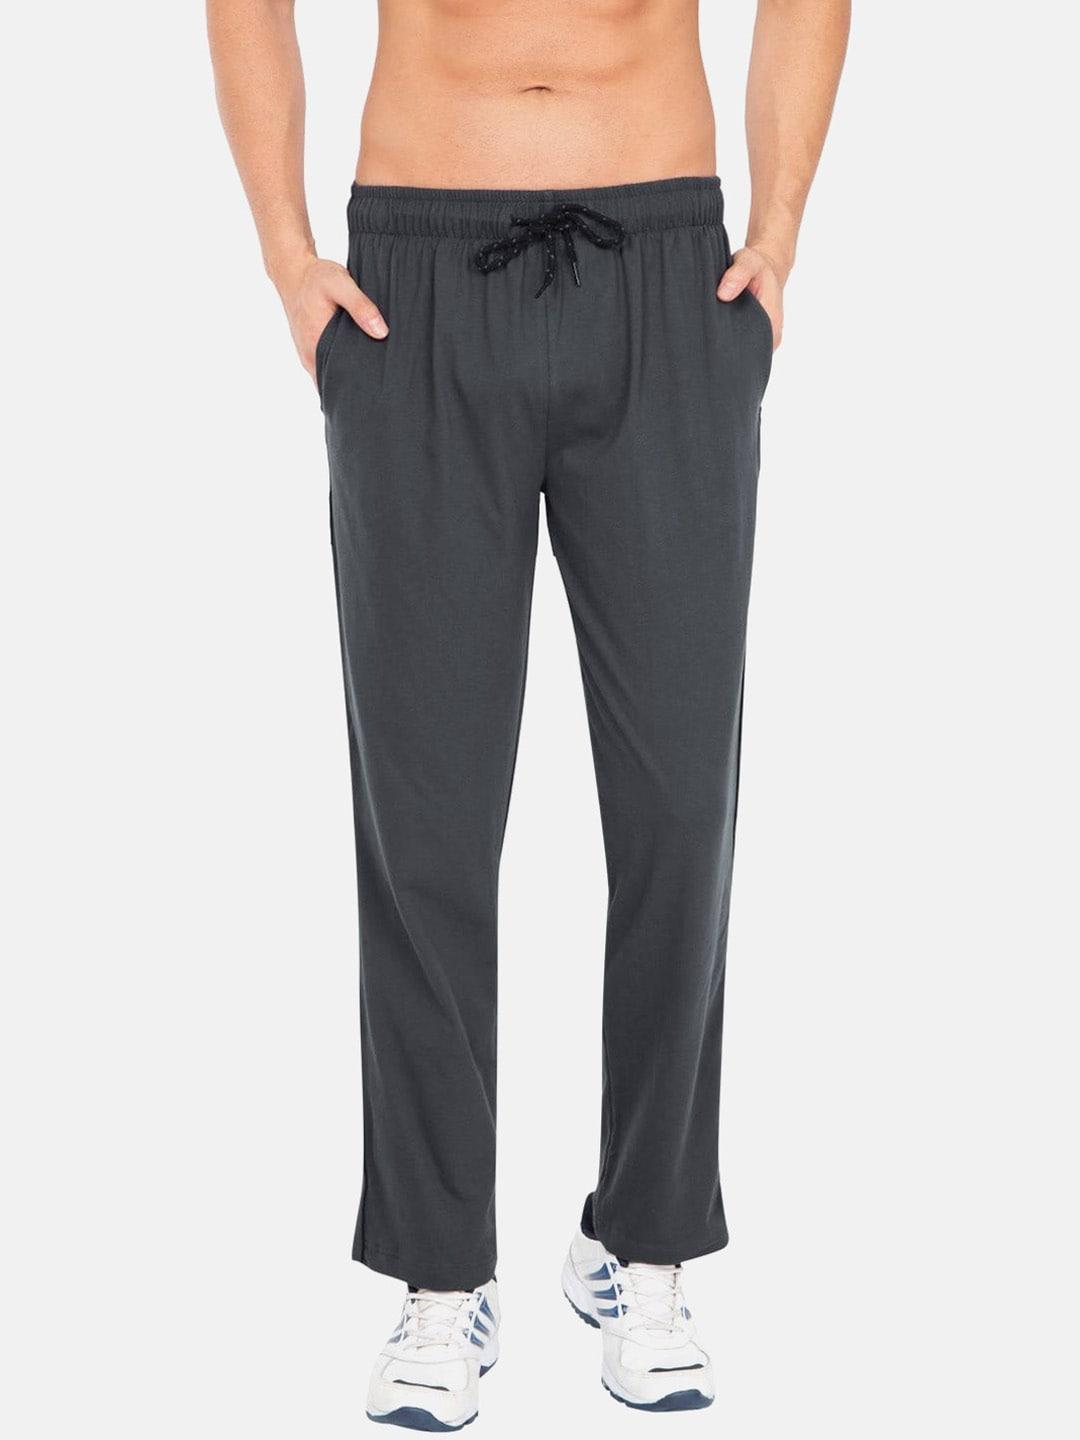 Jockey Men Charcoal Grey Comfort Fit Solid Track Pants